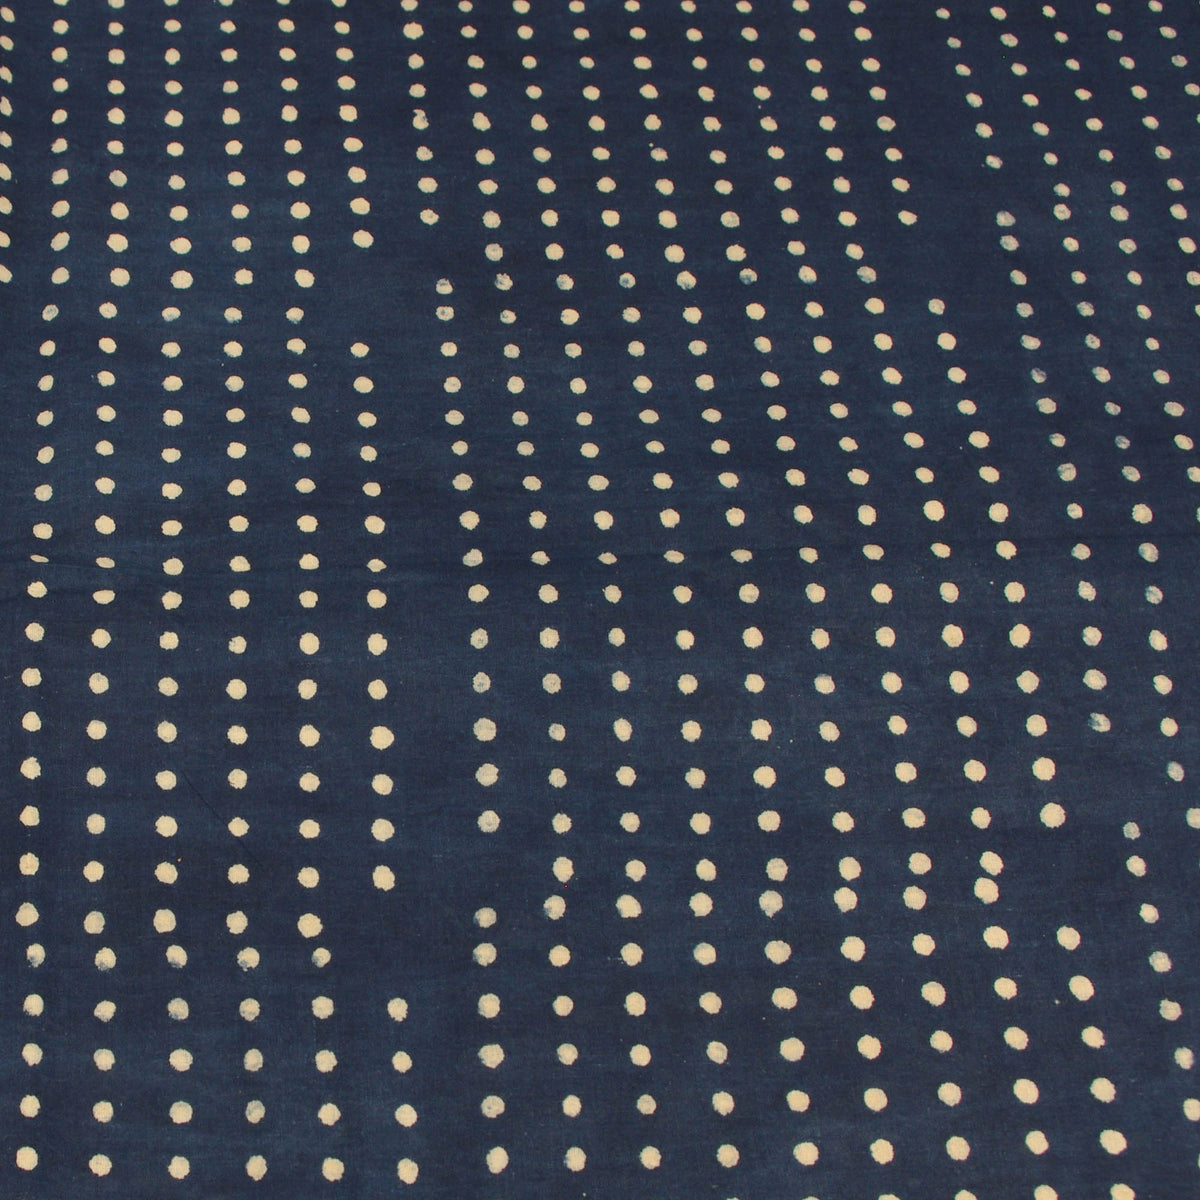 Block Print Fabric - Indigo Polaka Dots - Design 580